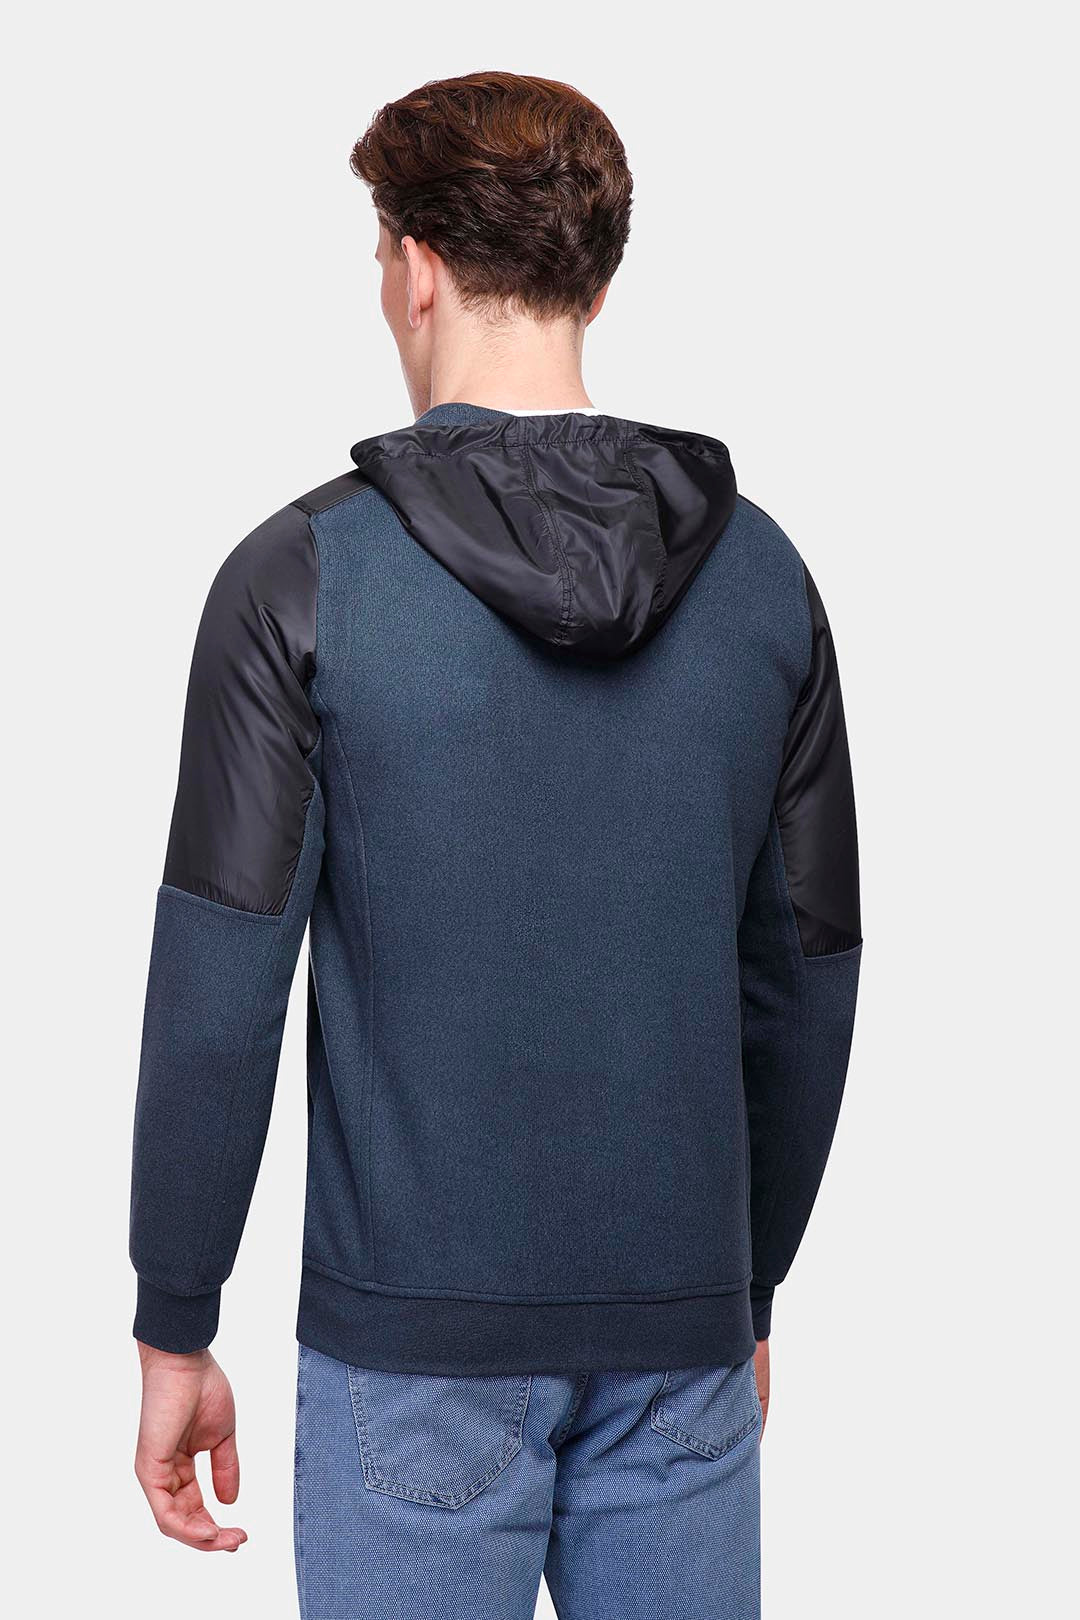 Grey Full Zipper Hoodei Sweatshirt